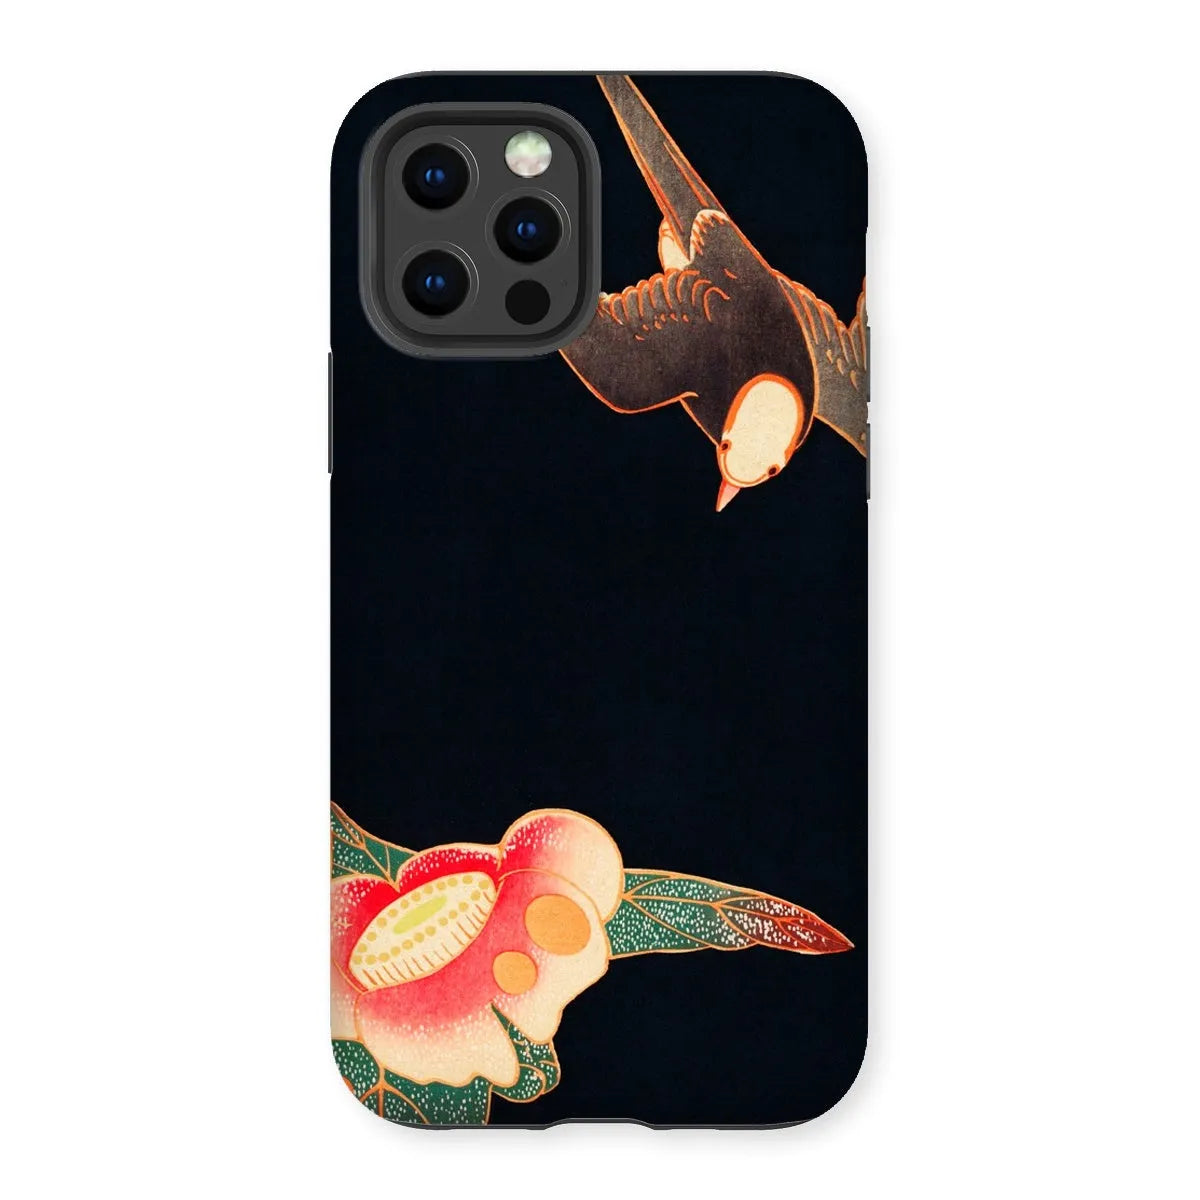 Swallow & Camellia - Meiji Era Art Phone Case - Ito Jakuchu - Iphone 12 Pro / Matte - Mobile Phone Cases - Aesthetic Art